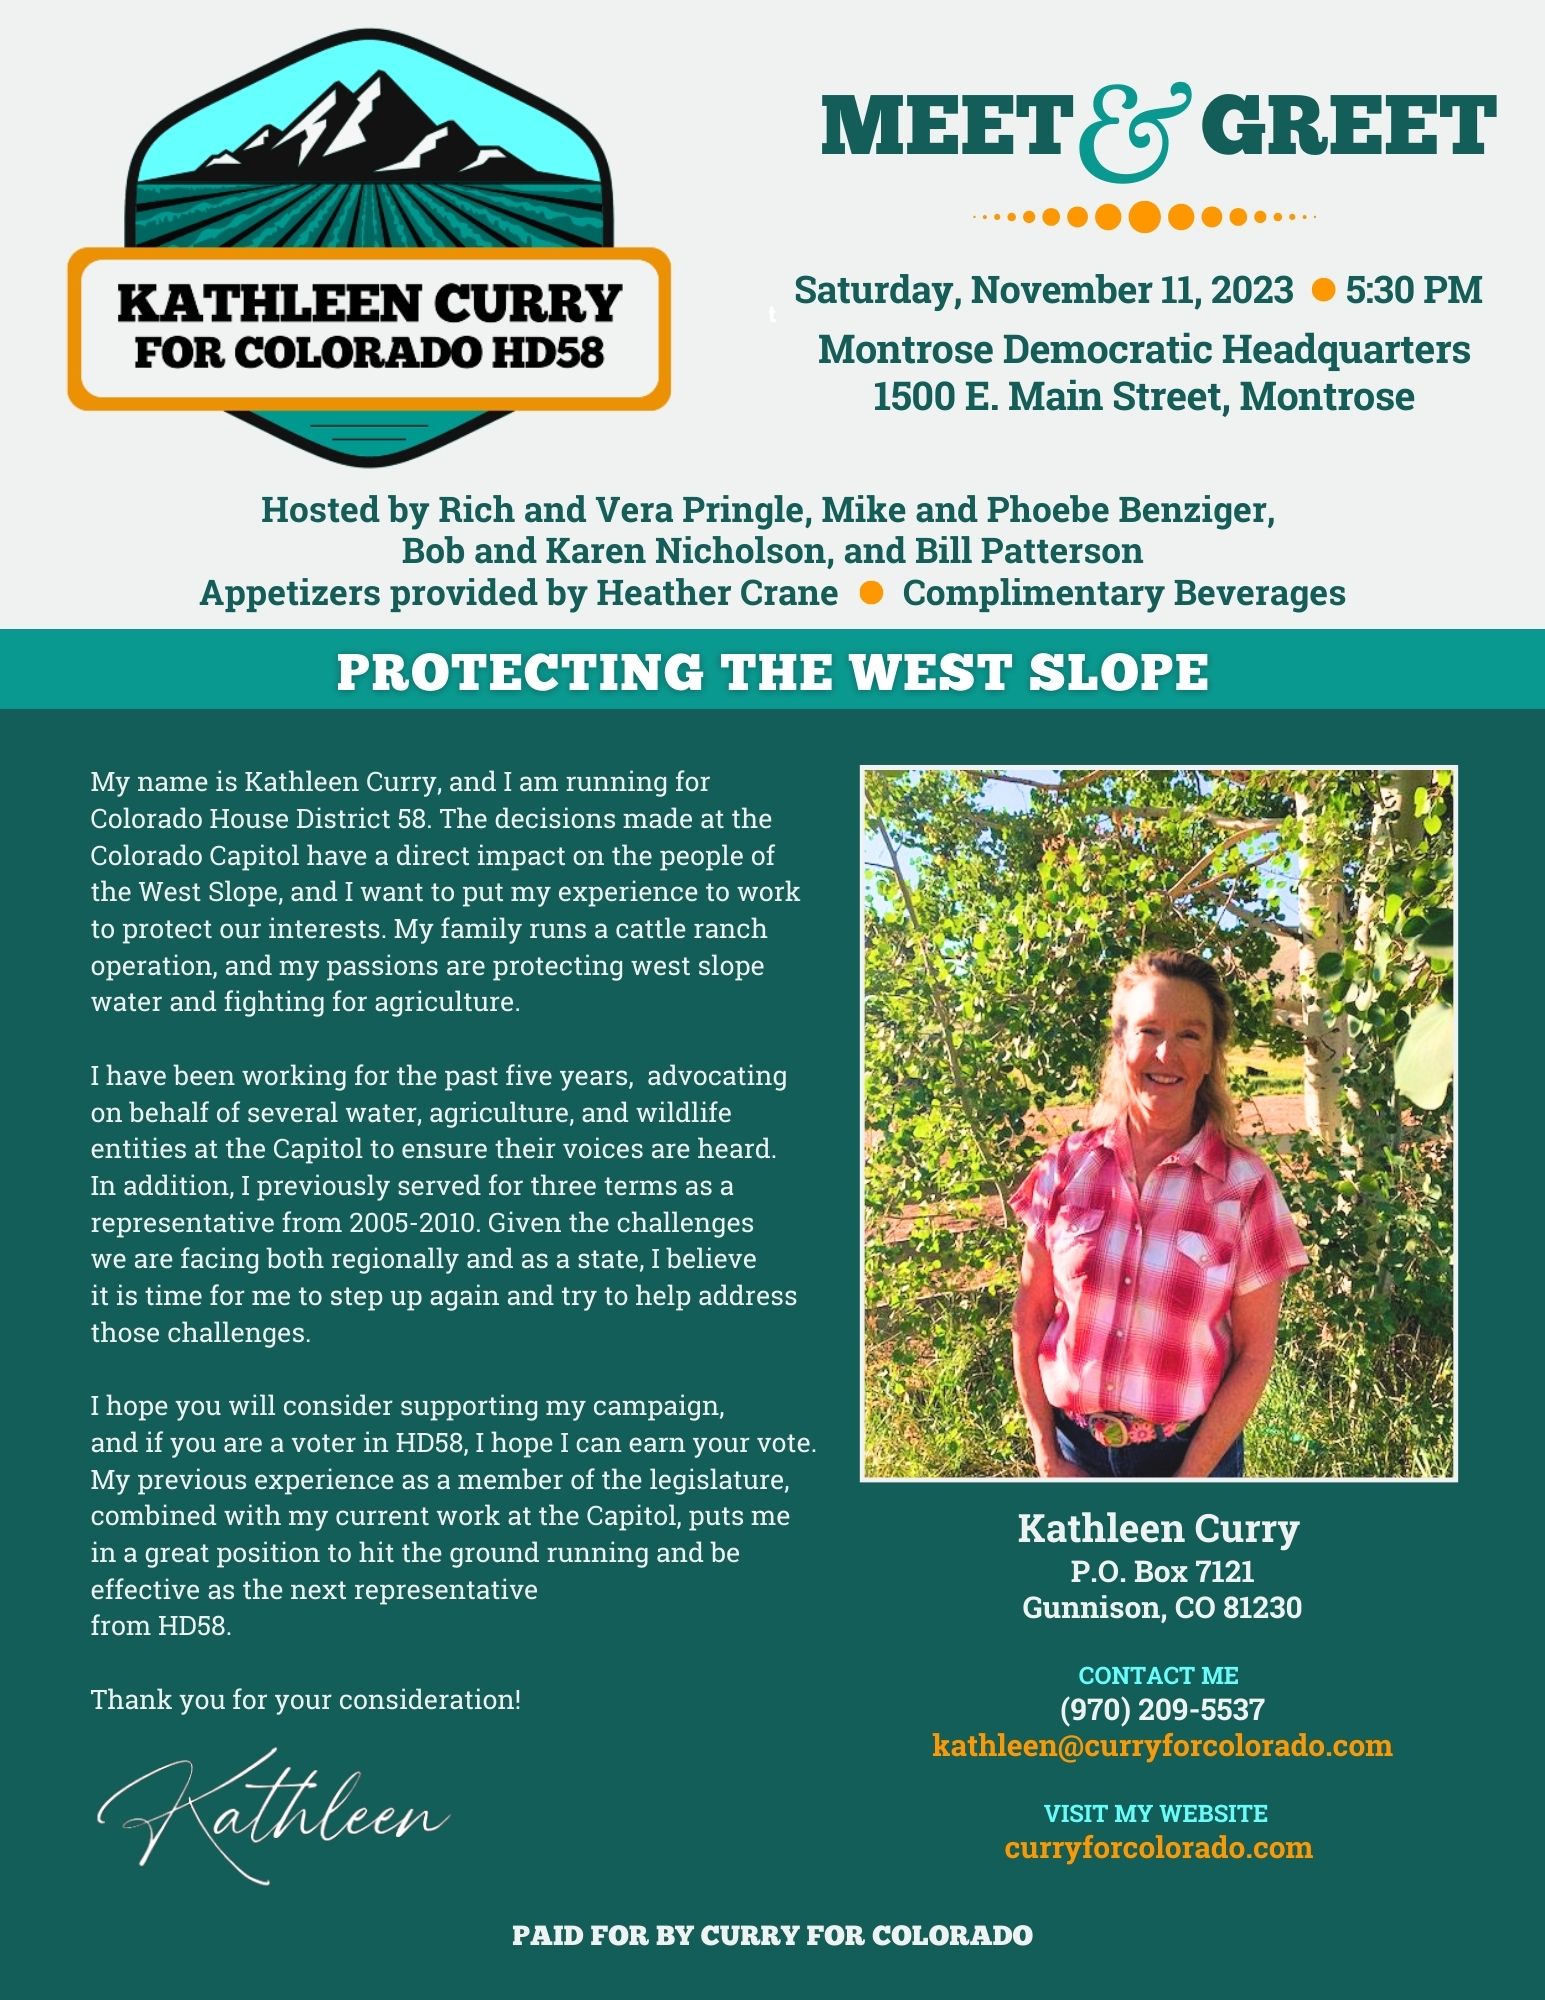 Kathleen Curry Meet & Greet Fundraiser | Saturday, November 11, 2023 at 5:30 PM 